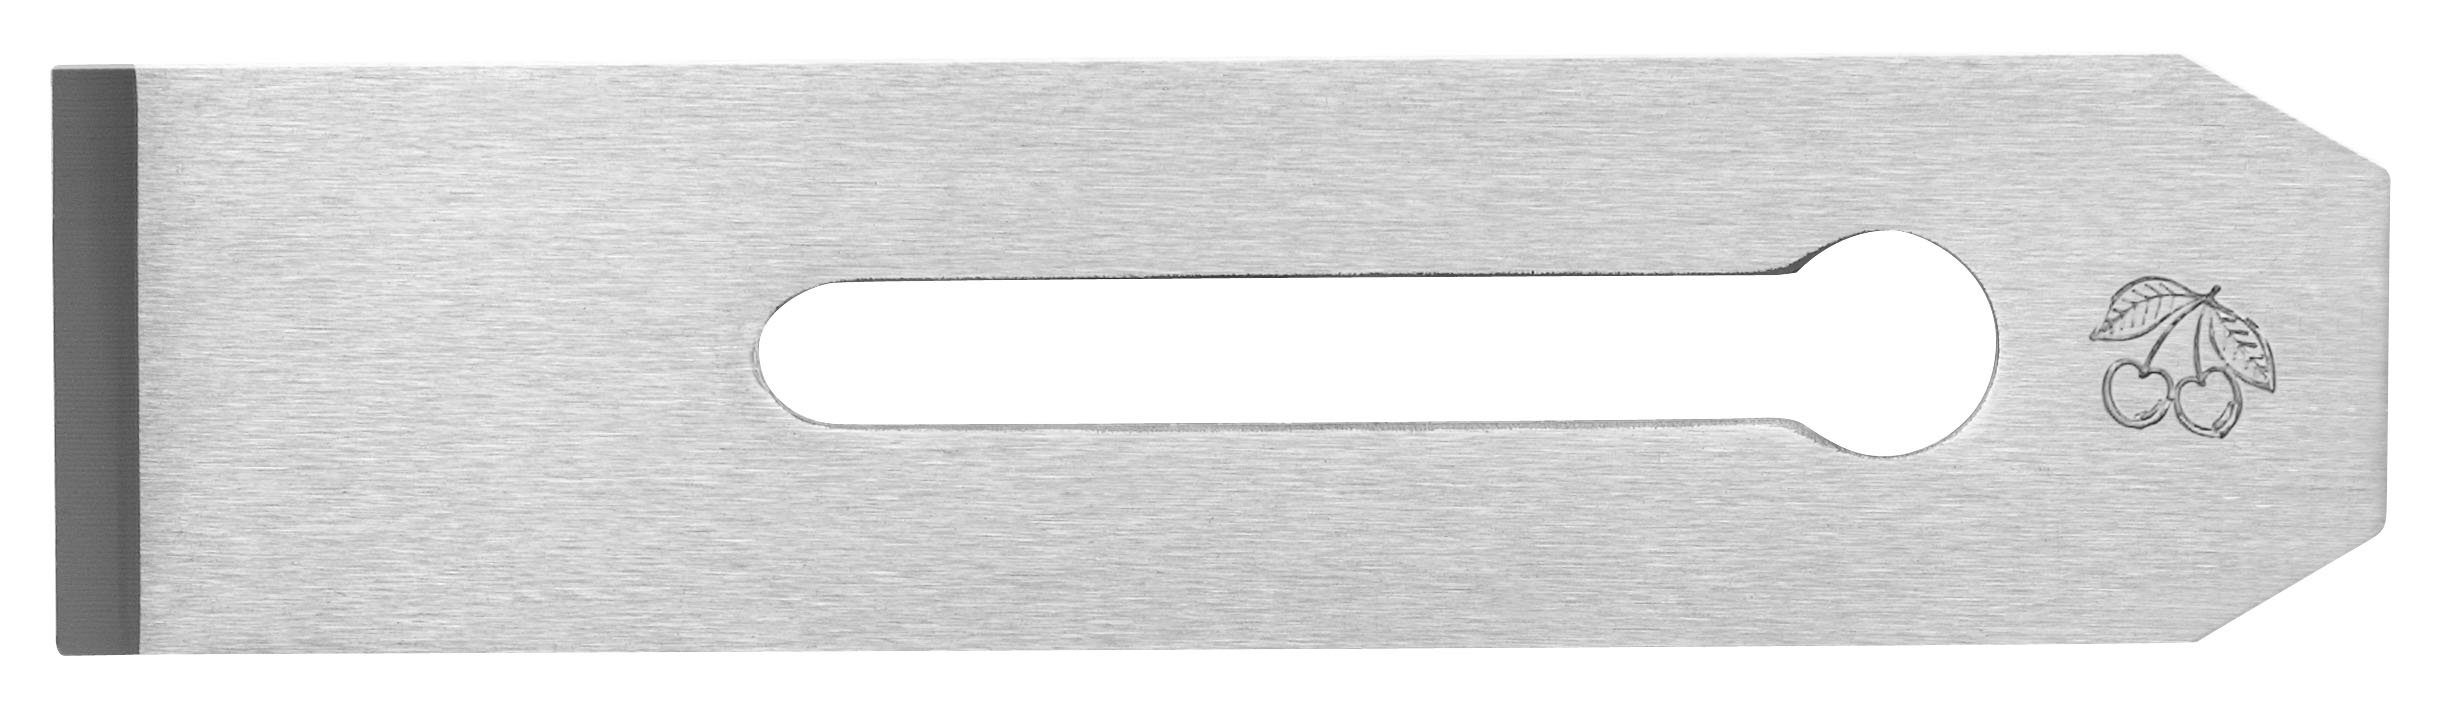 60mm - Hobelmesser Lochhobeleisen KIRSCHEN Kirschen